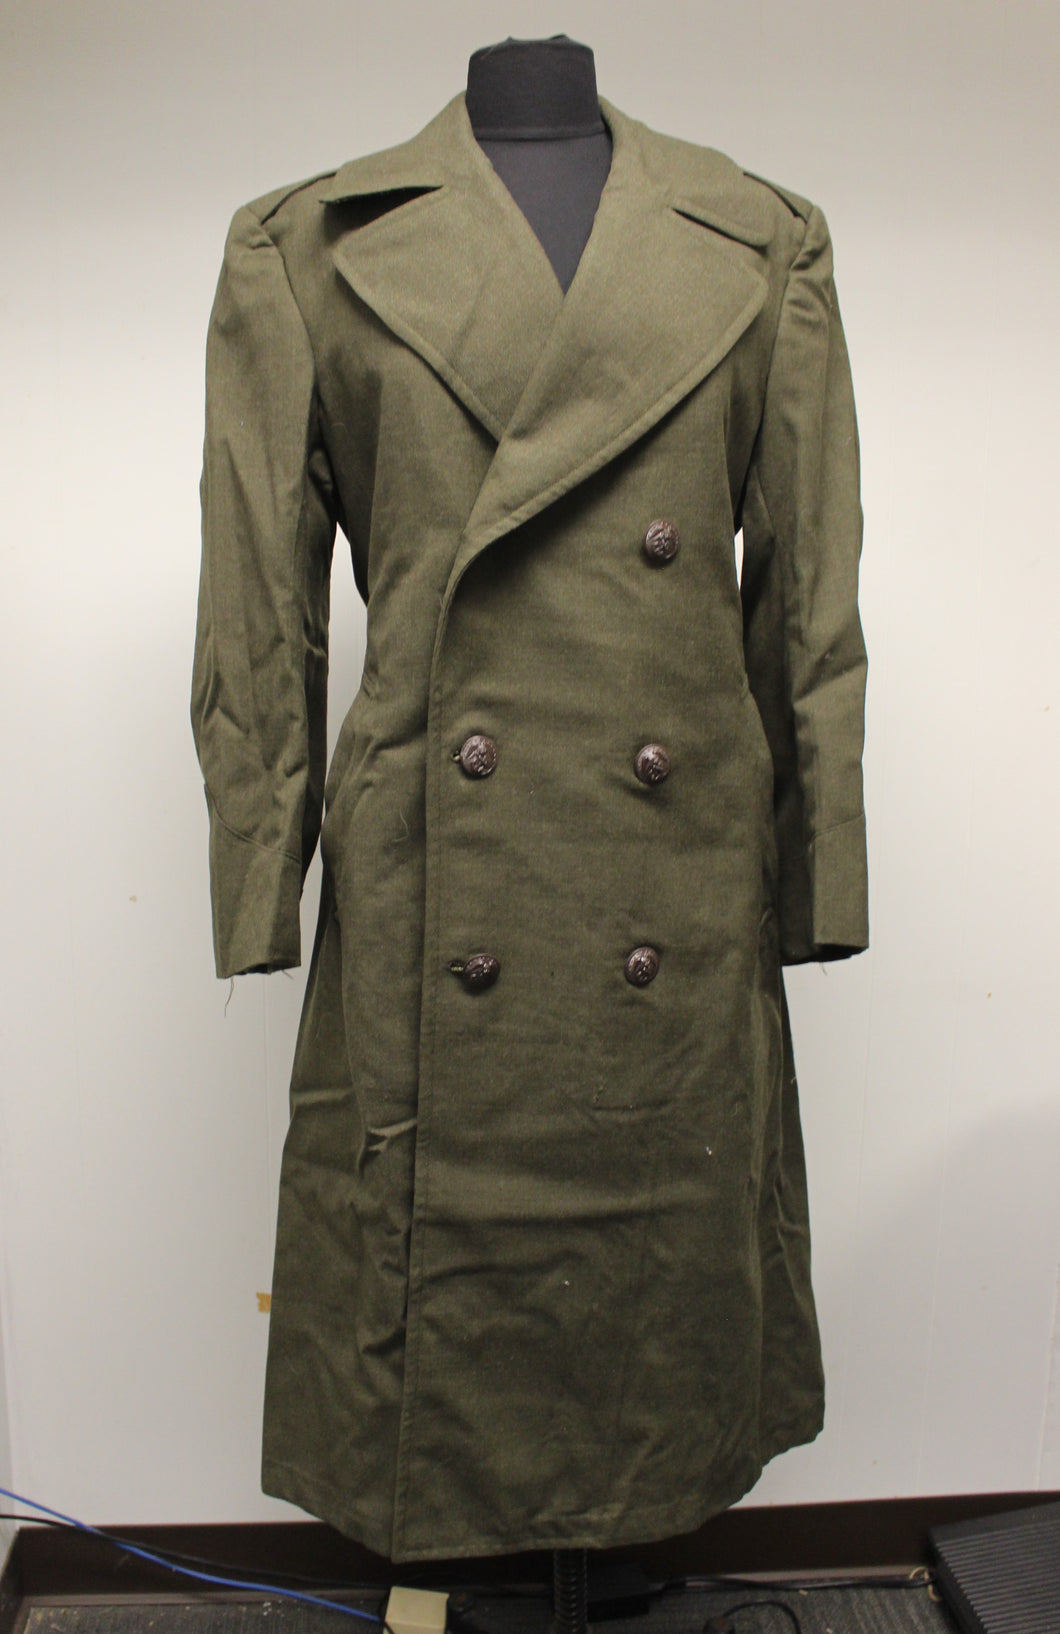 USMC Marine Corp Man's Wool Serge Overcoat - Size: 36R - Used